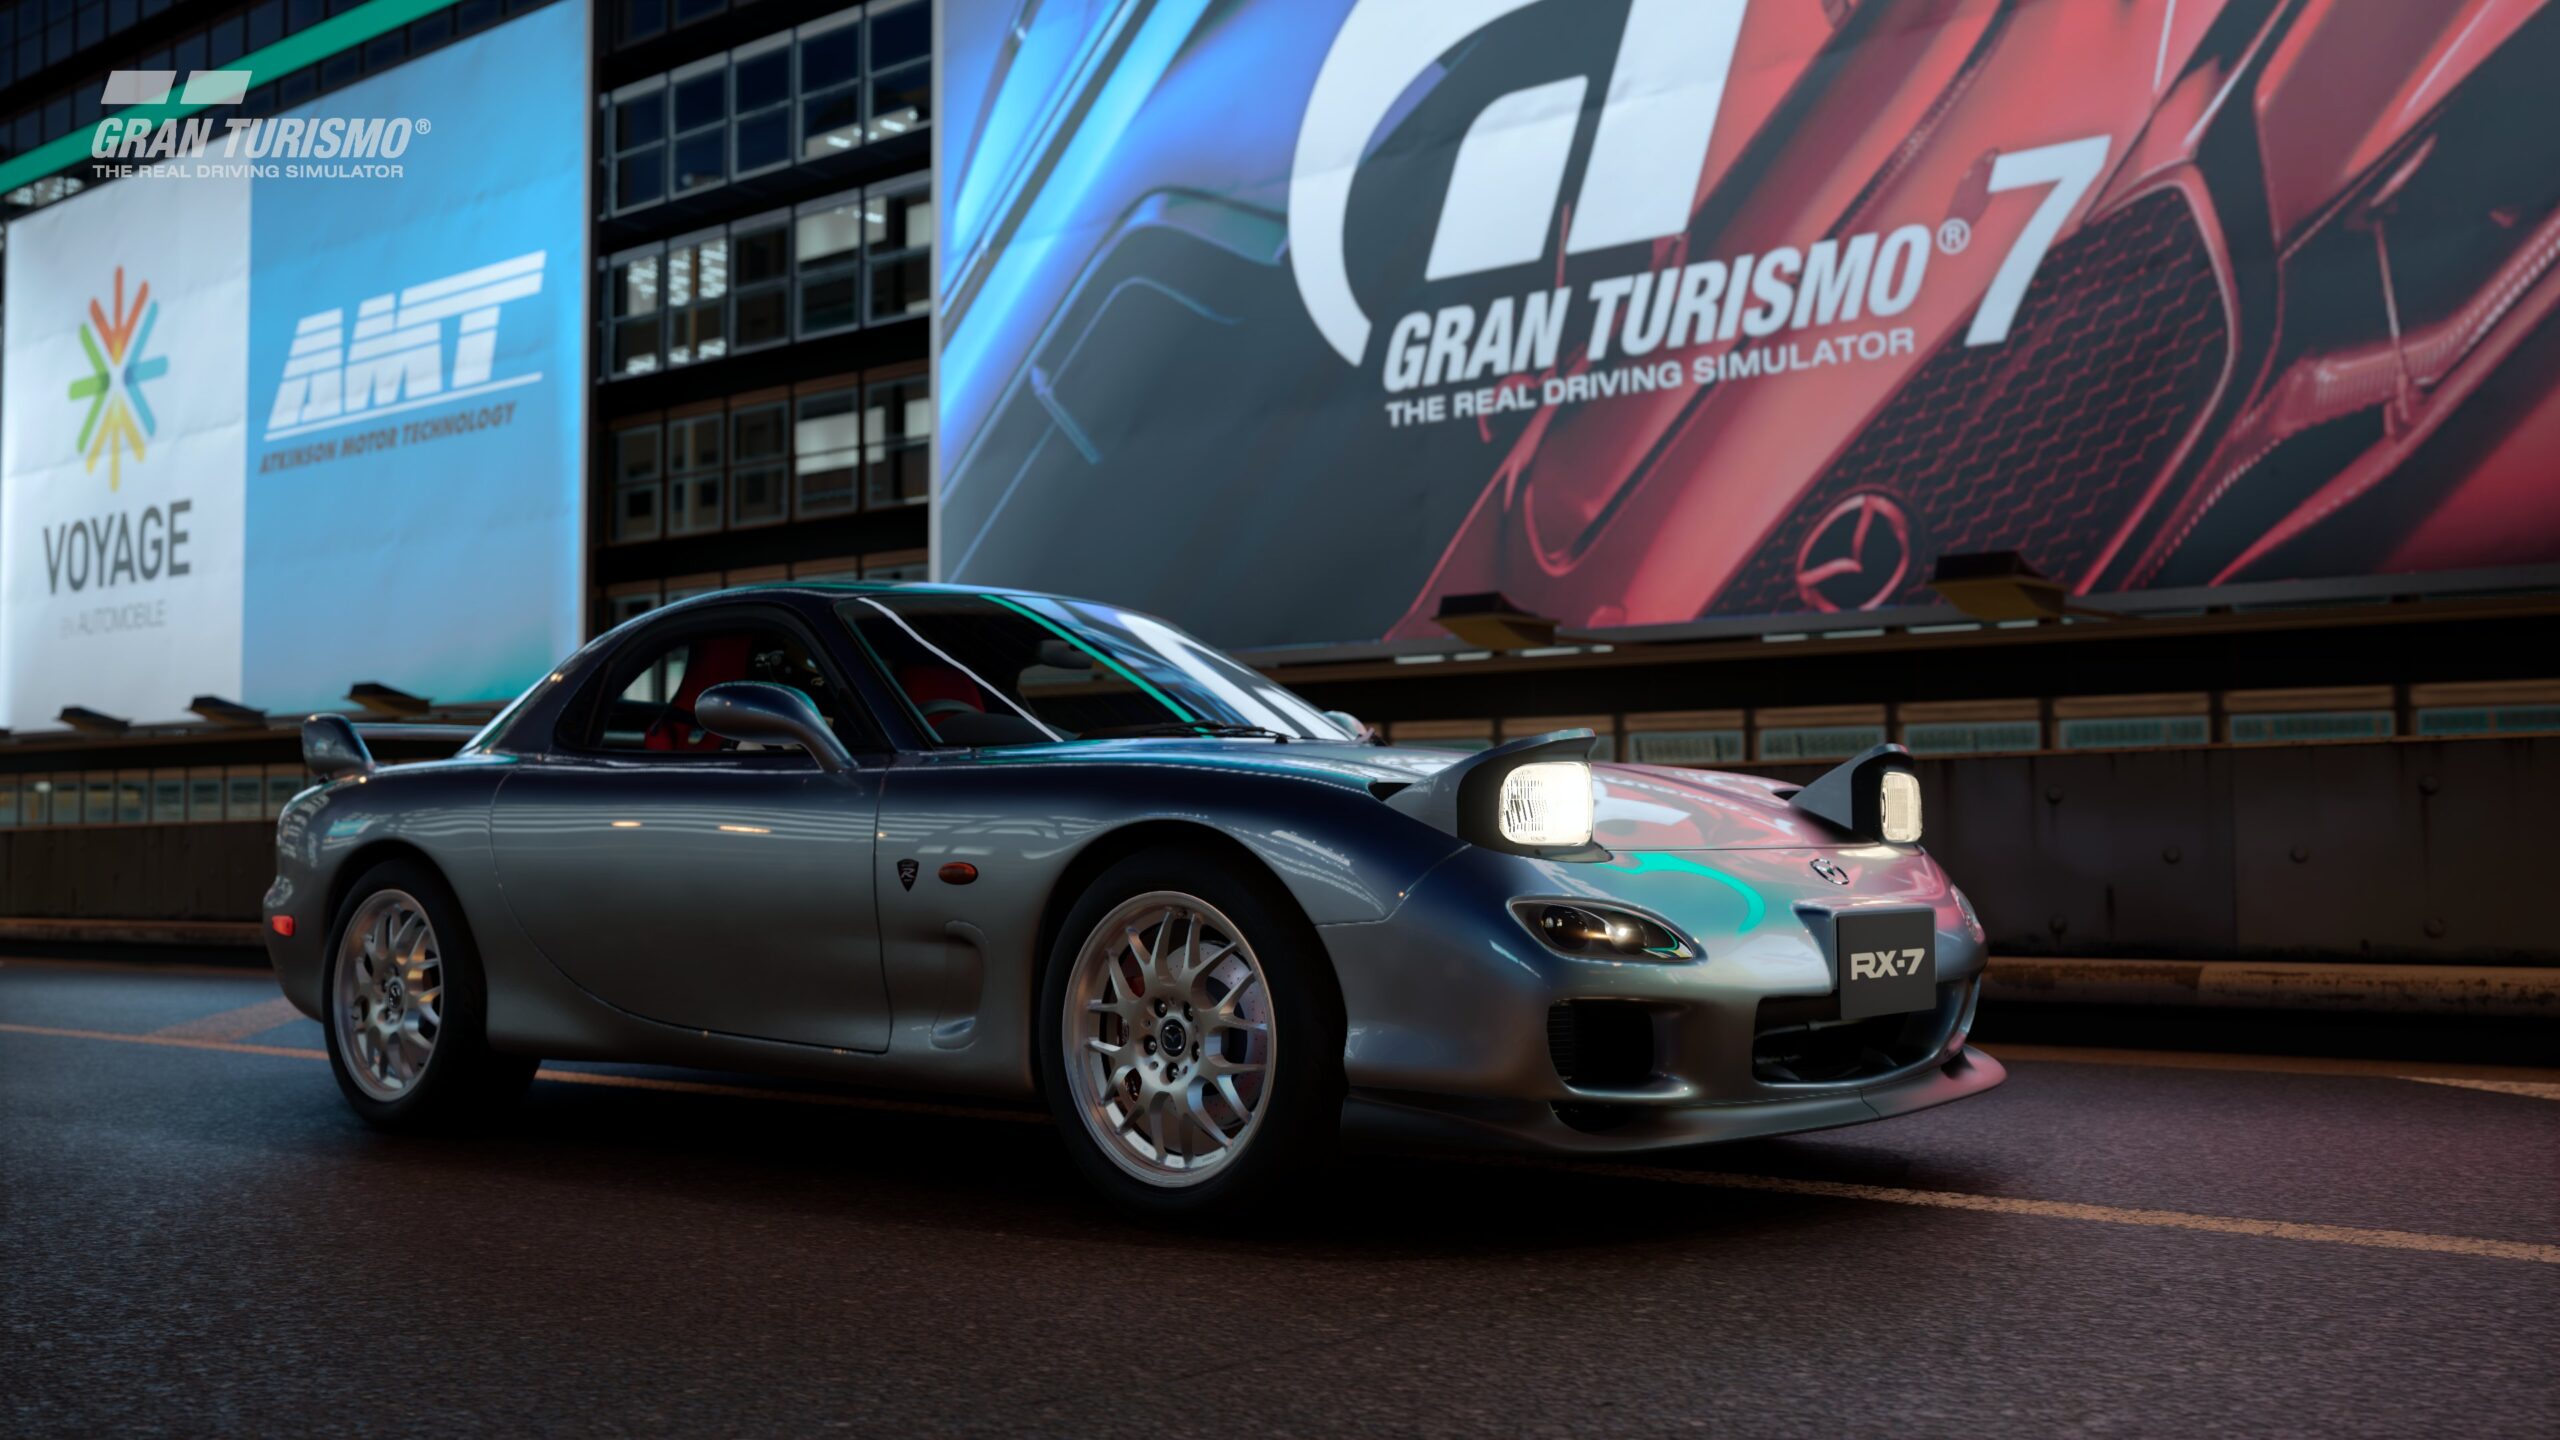 Gran Turismo 6 Online Shutdown of Servers Dated